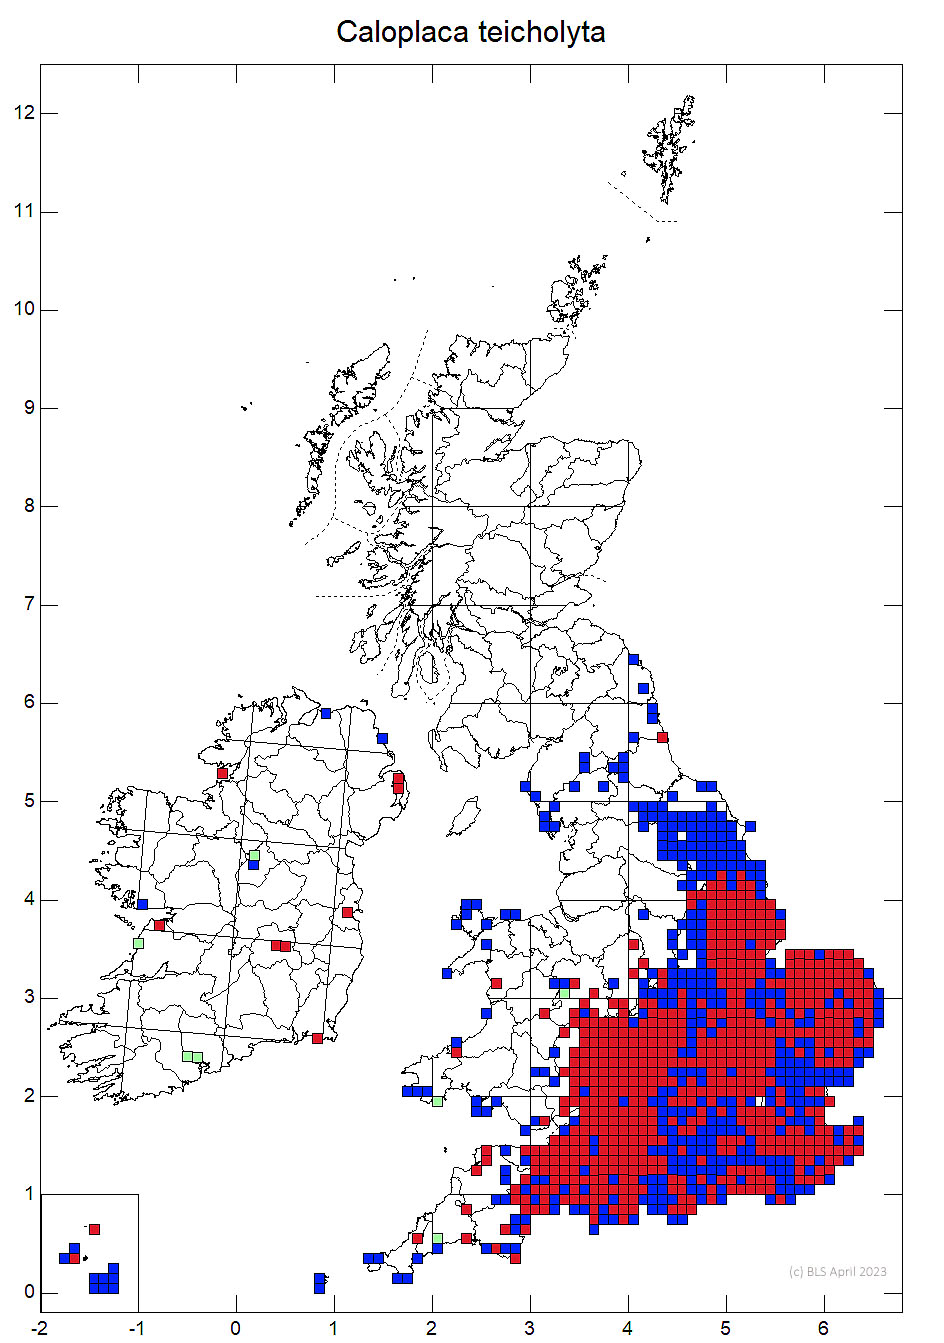 Caloplaca teicholyta 10km sq distribution map